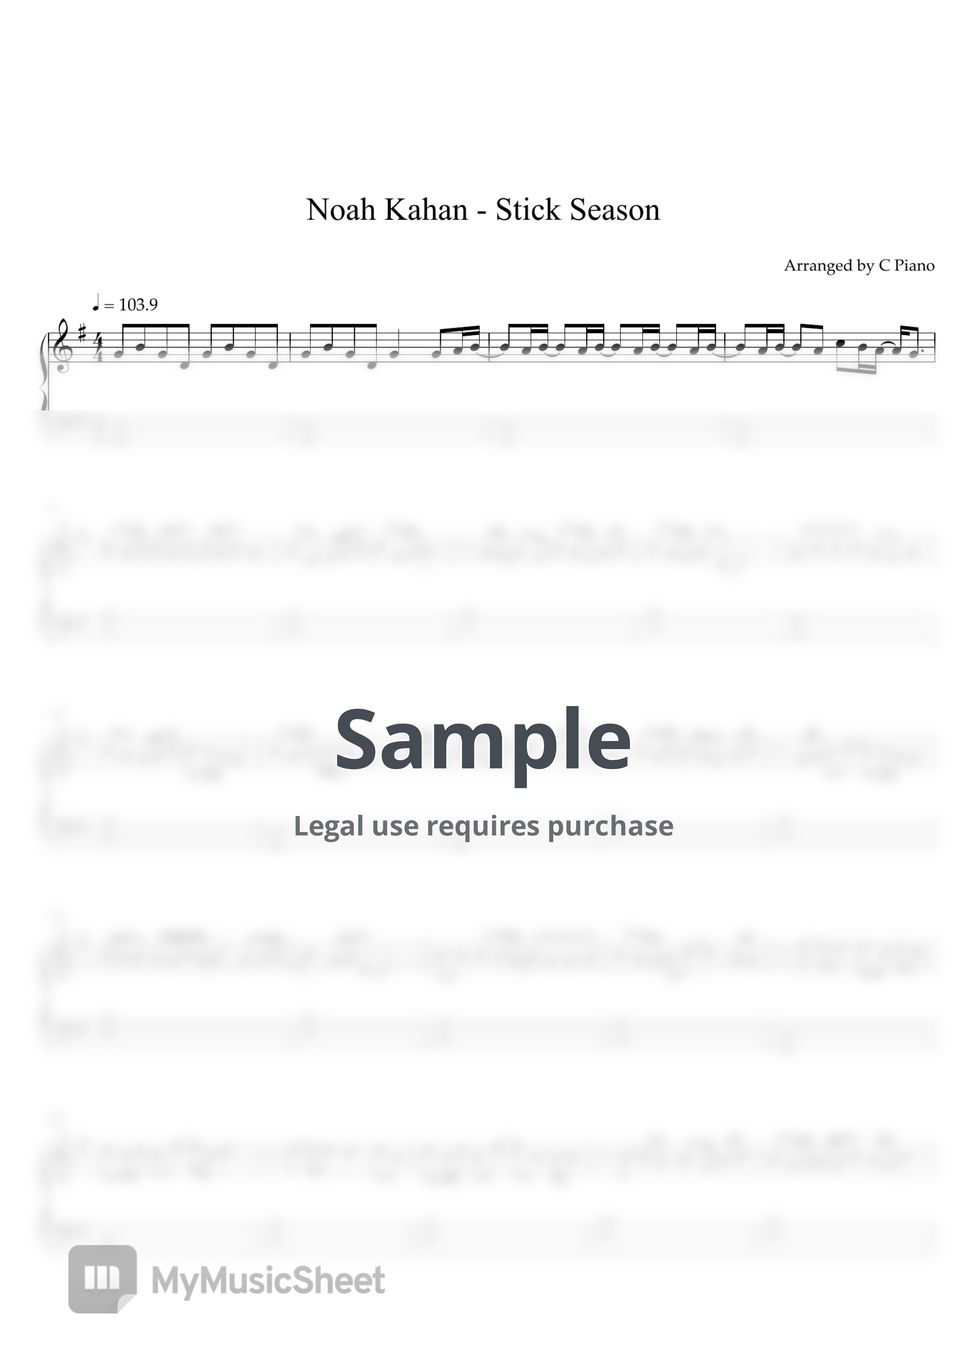 Noah Kahan - Stick Season (Easy) by C Piano